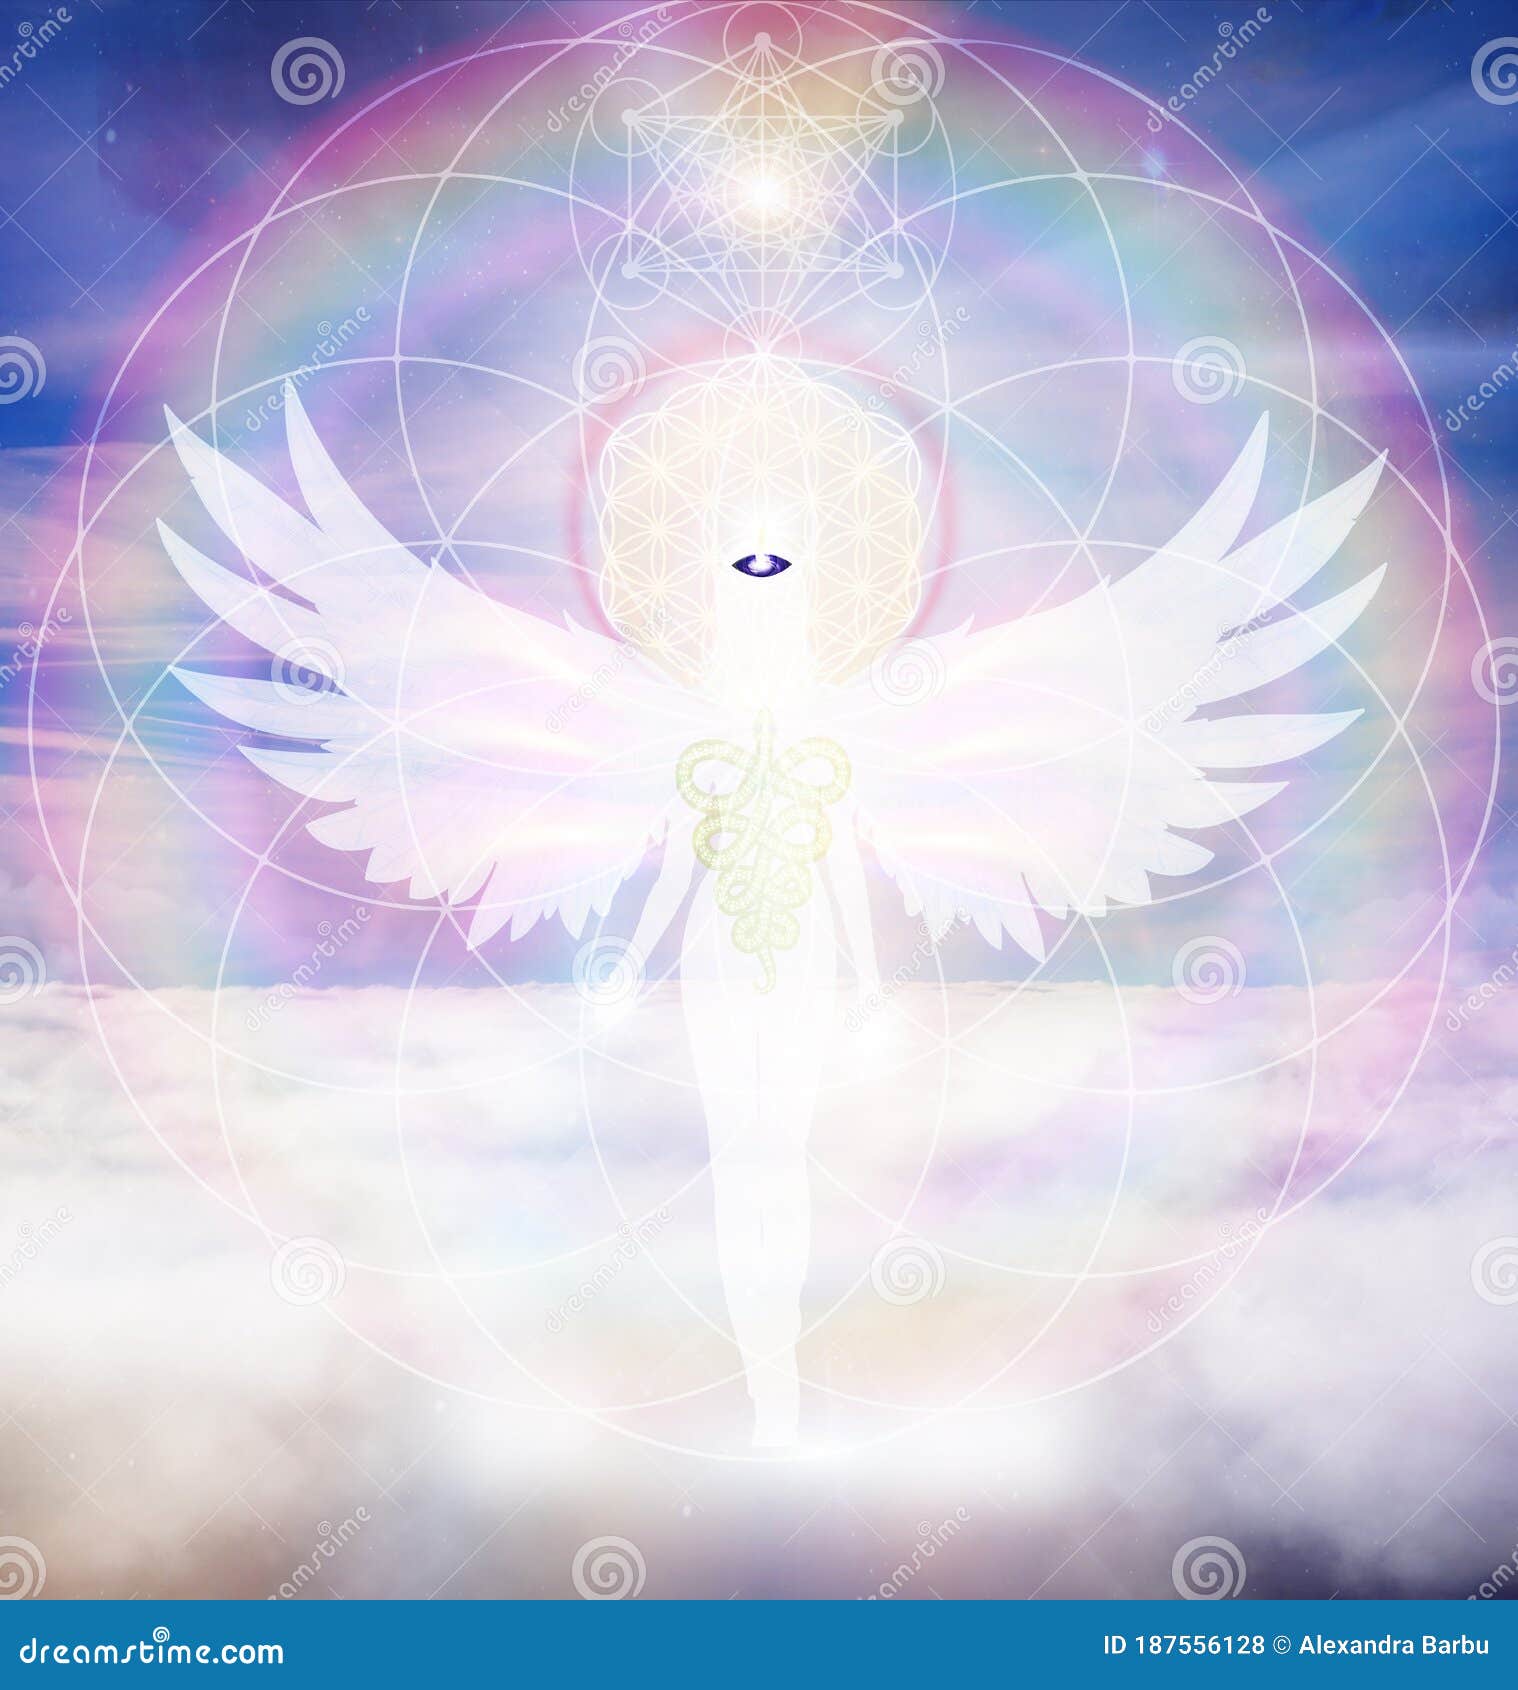 angels of divine light